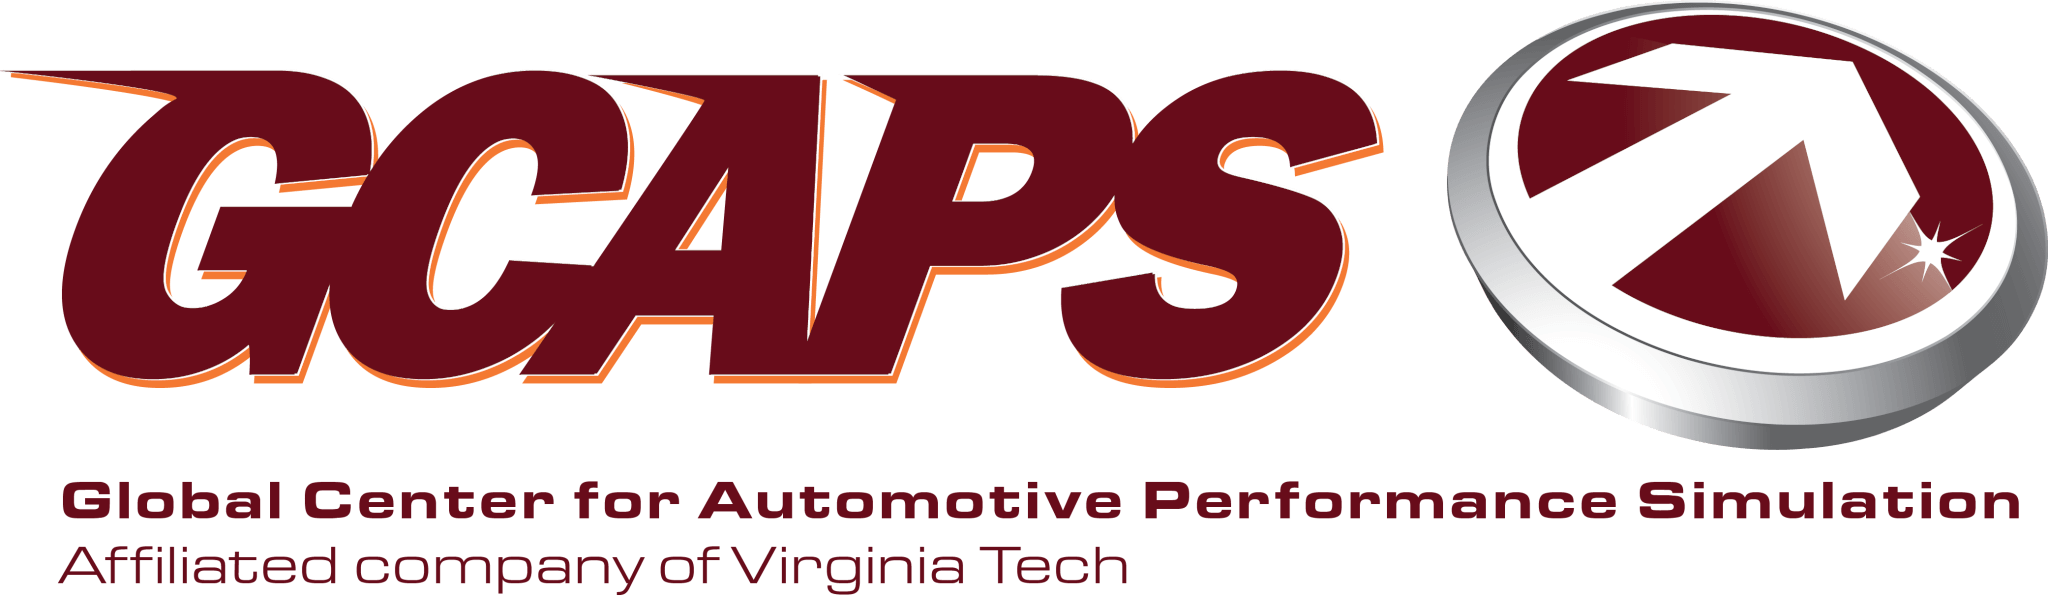 Global center for automotive performance simulation logo